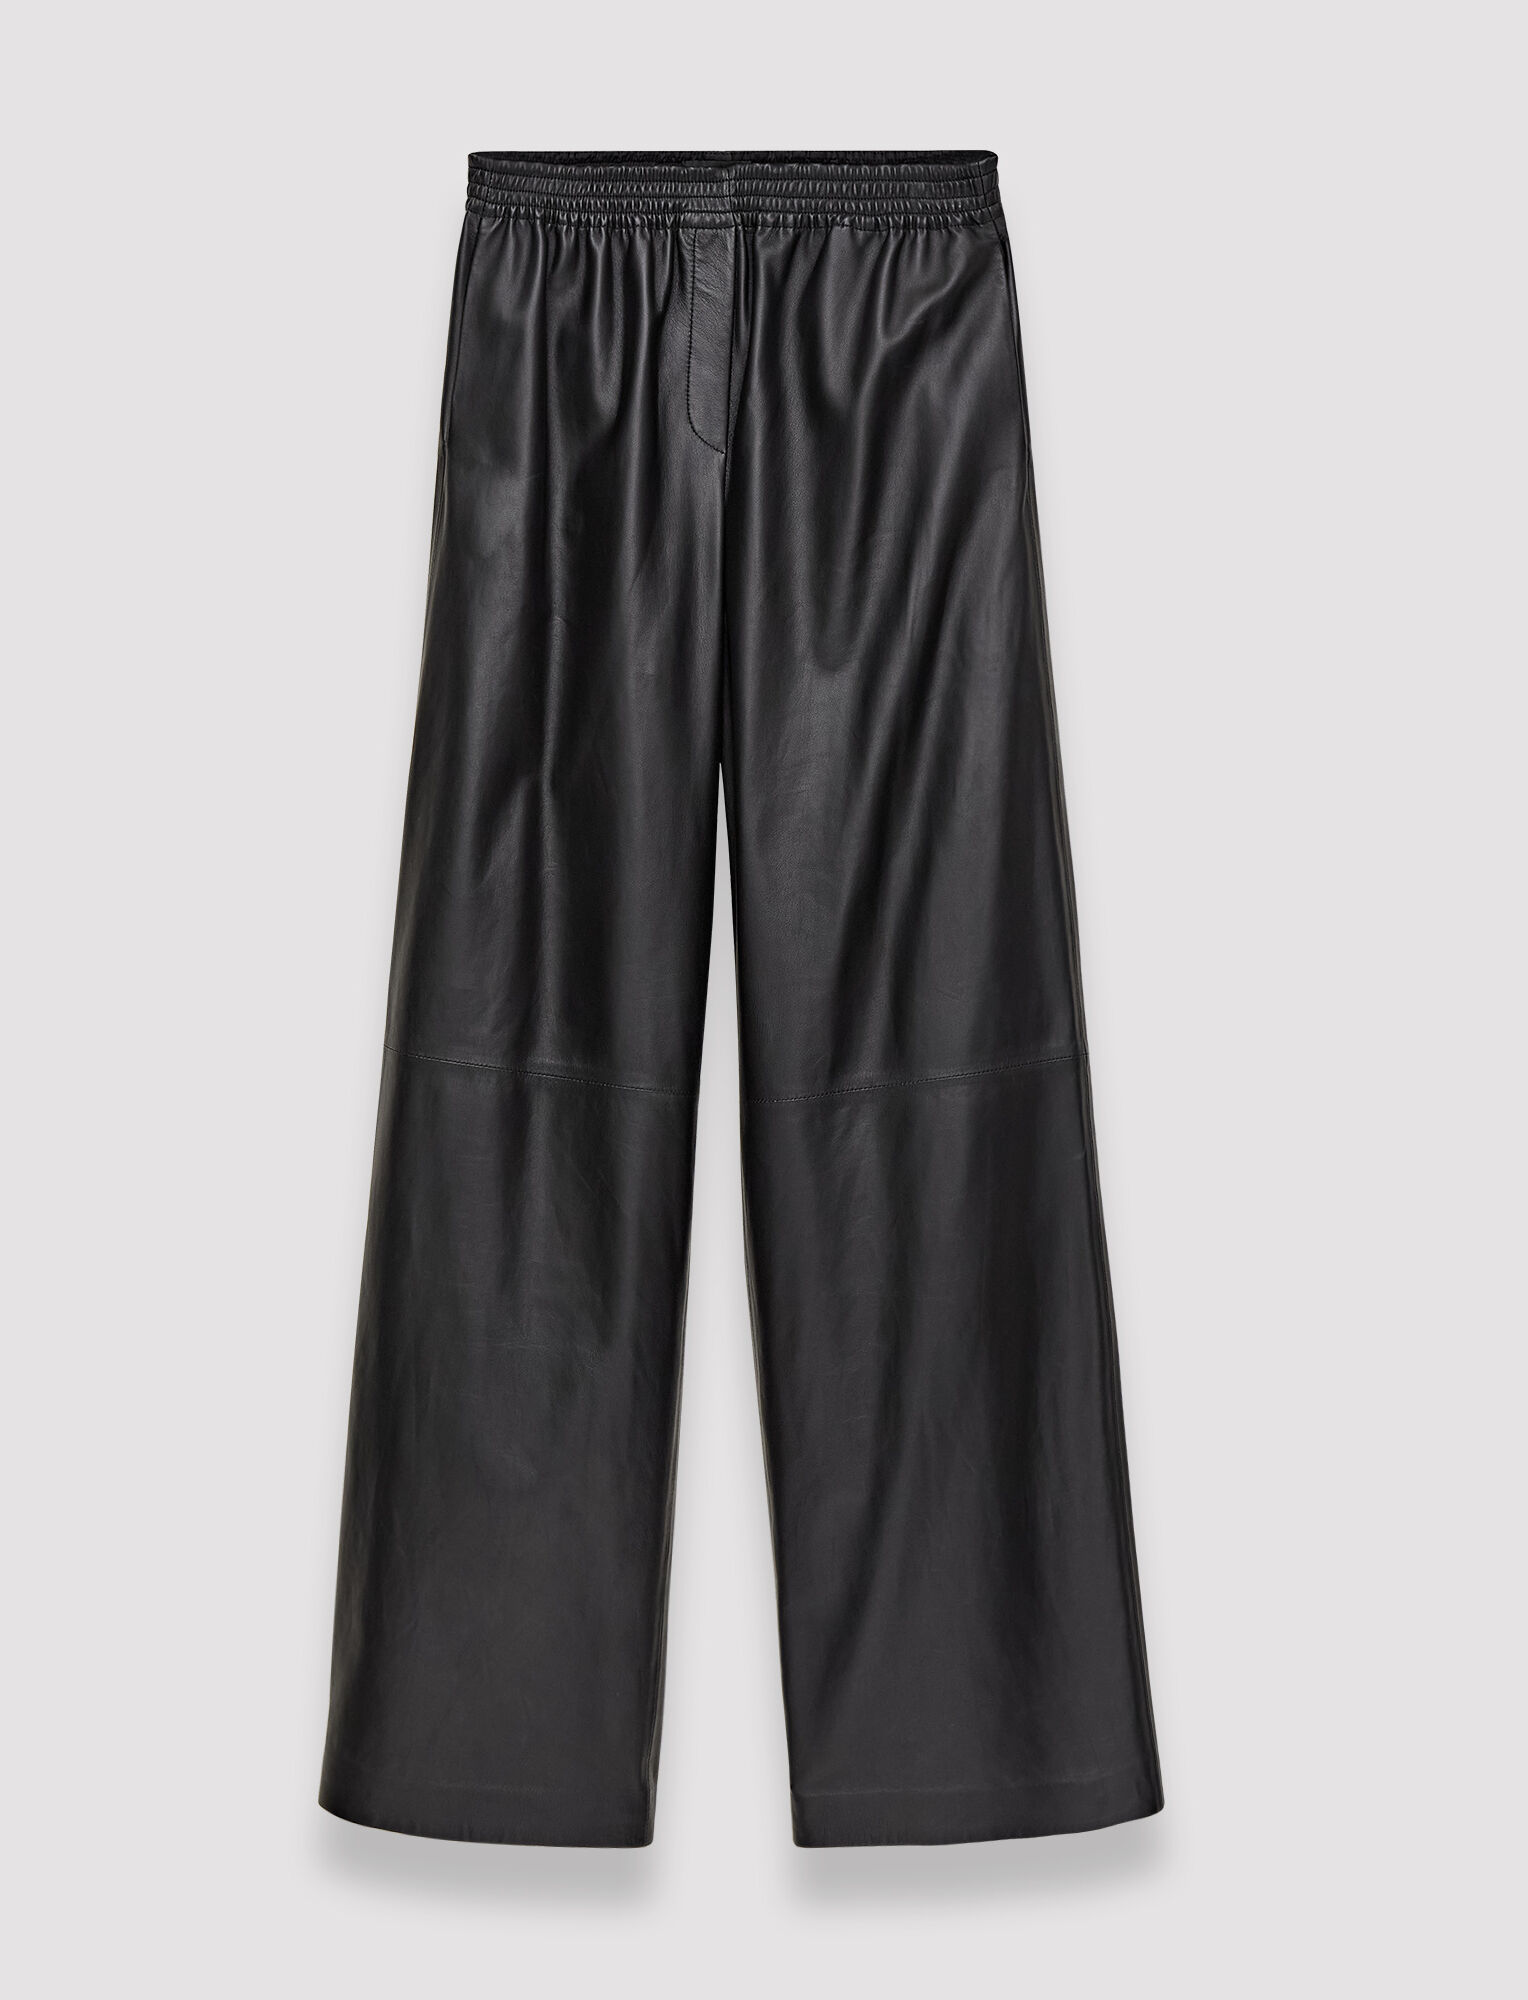 Joseph, Nappa Leather Ashbridge Trousers, in Black